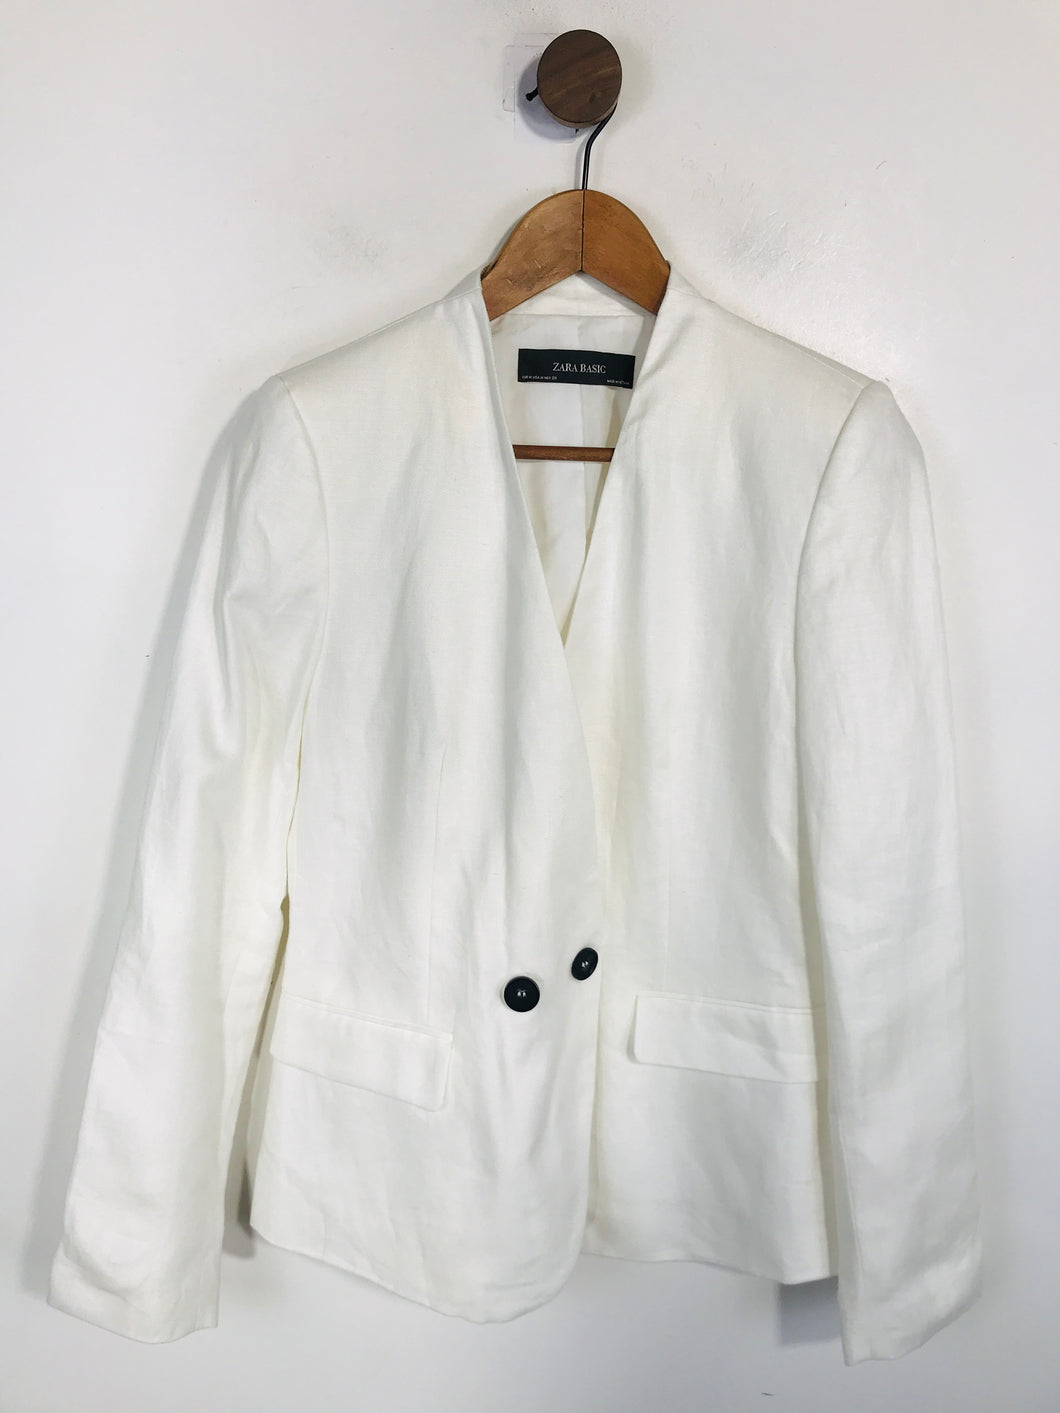 Zara Women's Linen Collarless Blazer Jacket | M UK10-12 | White